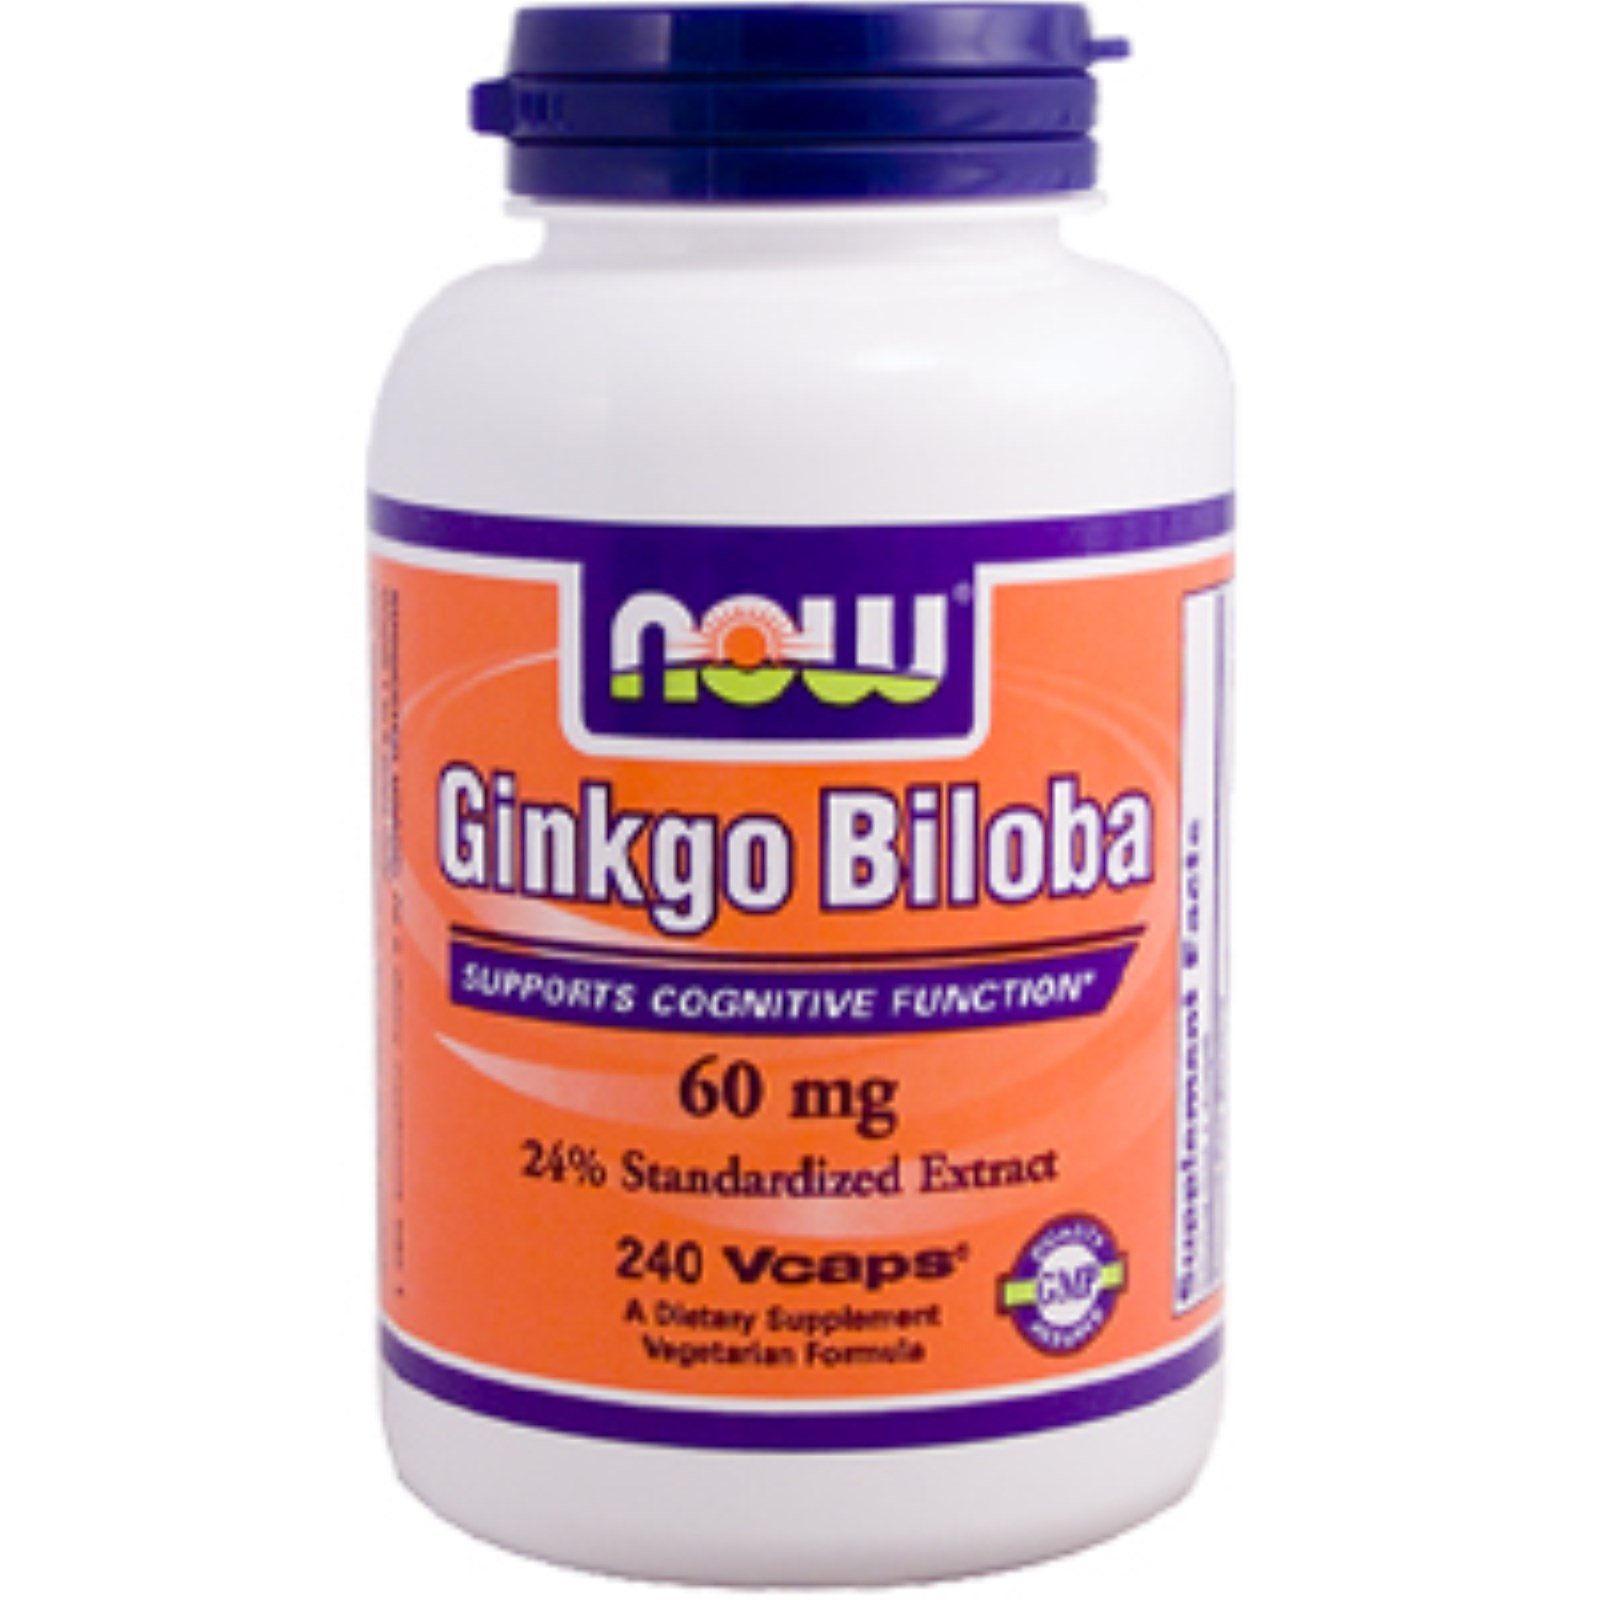 Ginkgo Biloba 60 mg, 240 pcs, Now. Special supplements. 